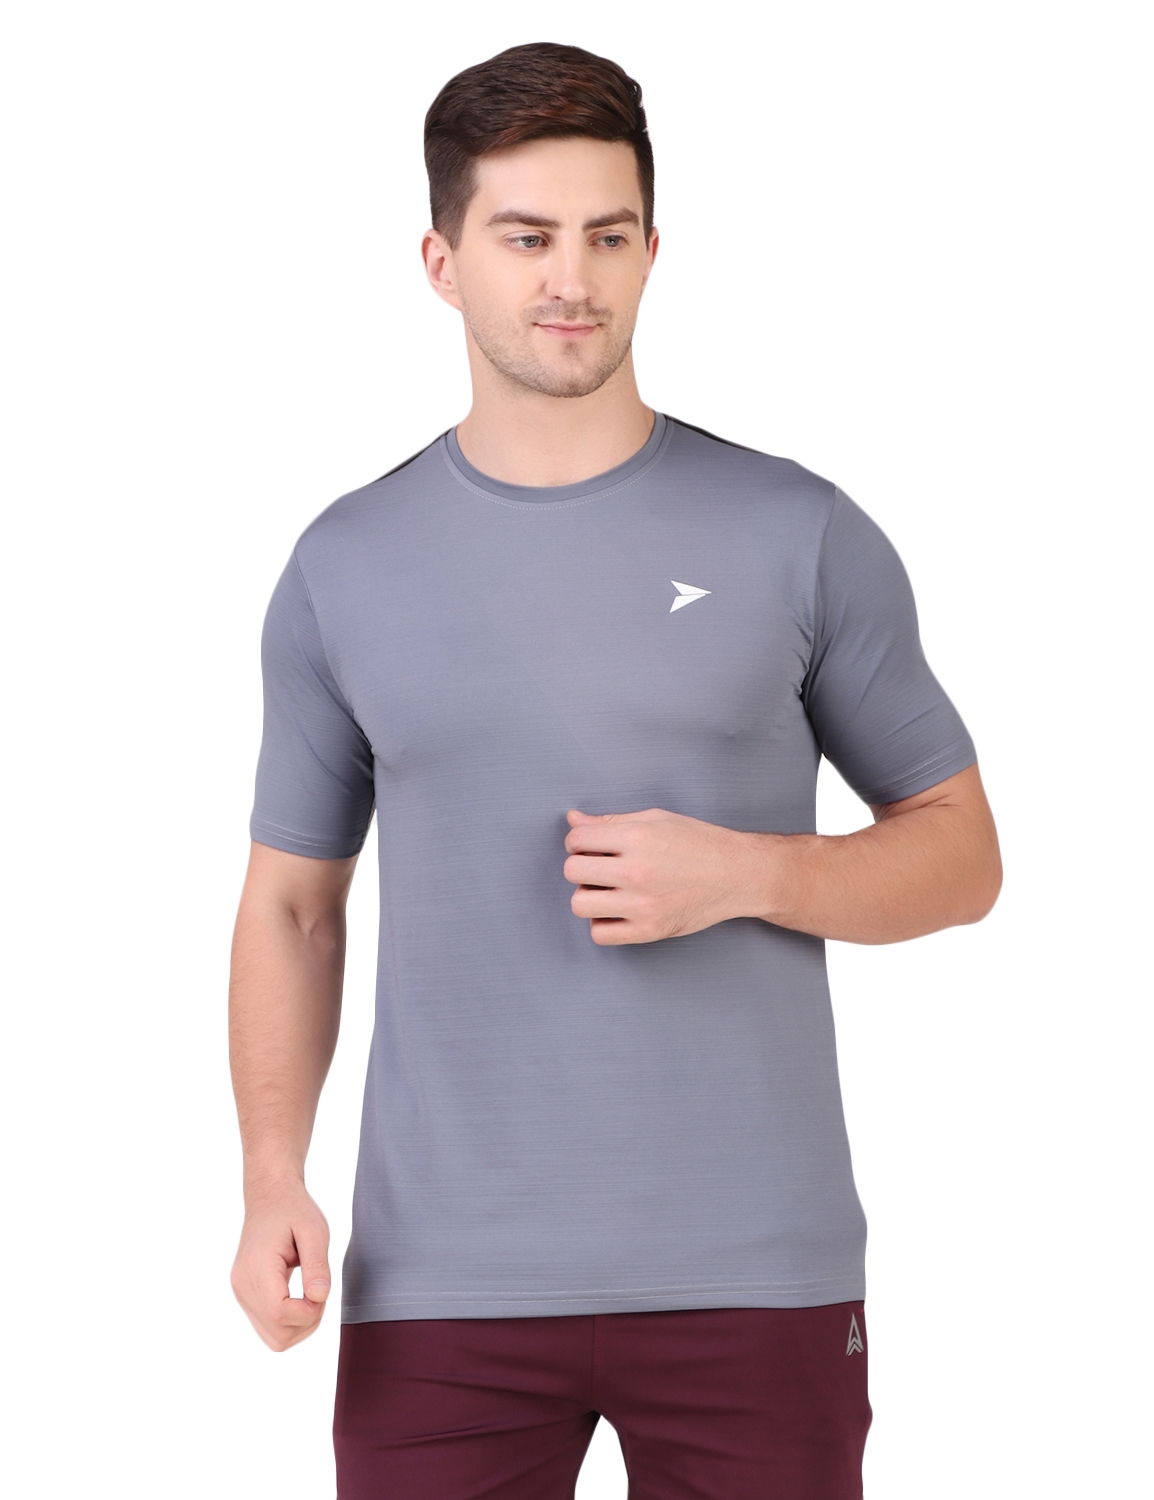 Fitinc Men's Round Neck Slimfit Gym & Active Sports Grey T-Shirt